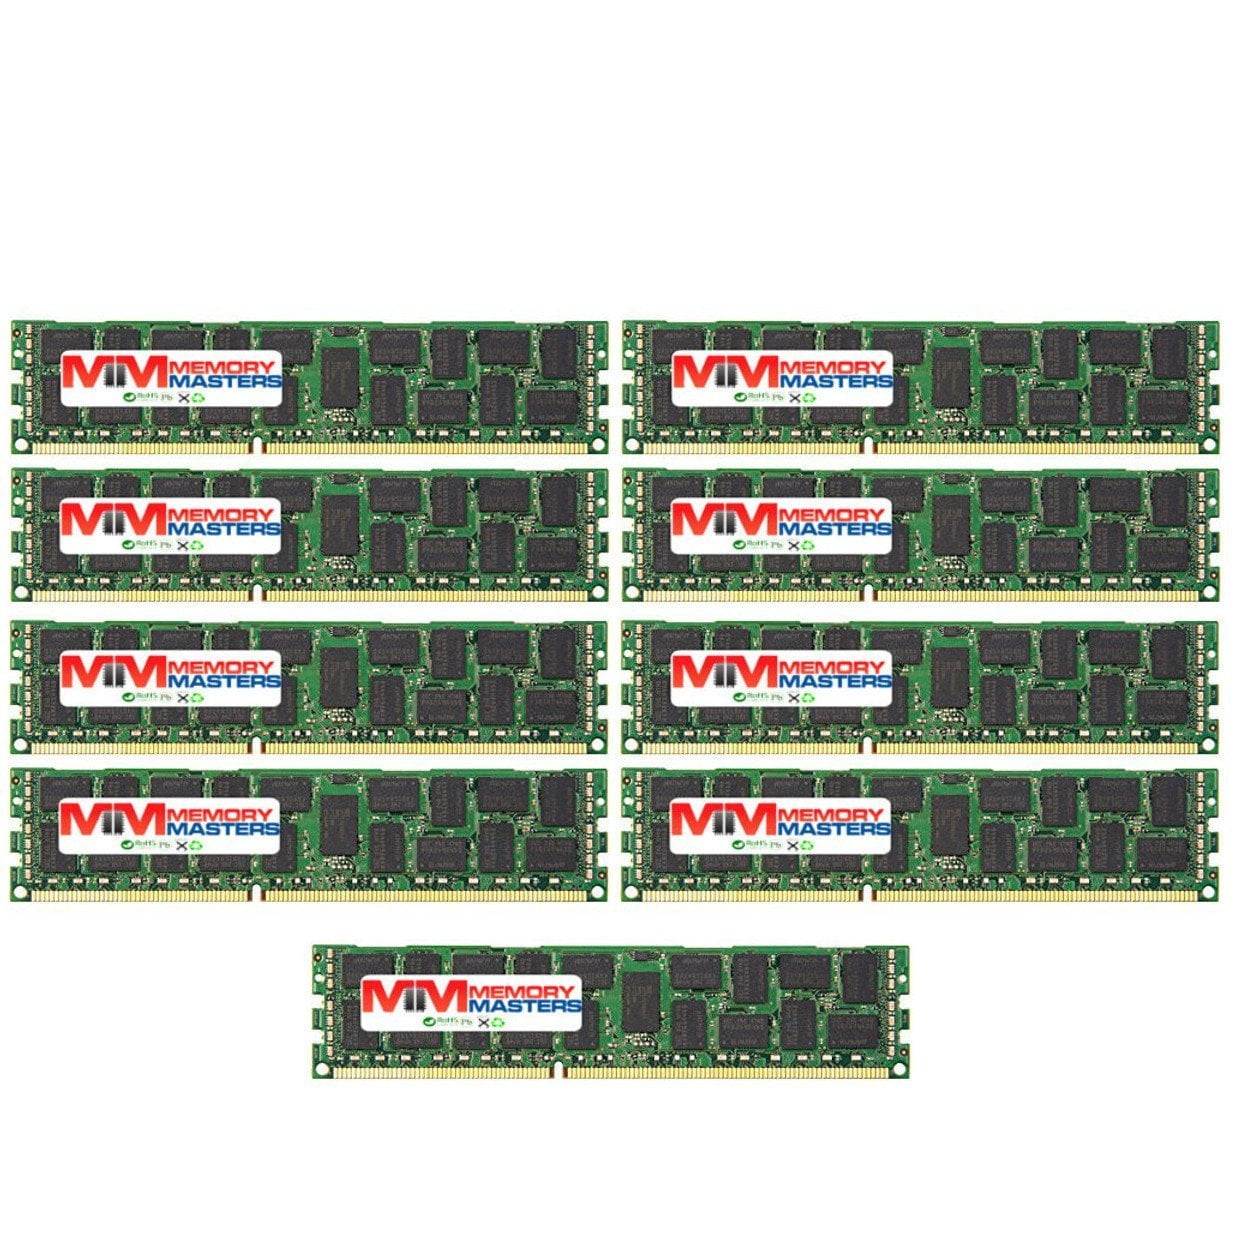 DDR3-1600MHz PC3-12800 ECC UDIMM 1Rx8 1.35V Unbuffered Memory for Server/Workstation MemoryMasters 32GB 8x4GB